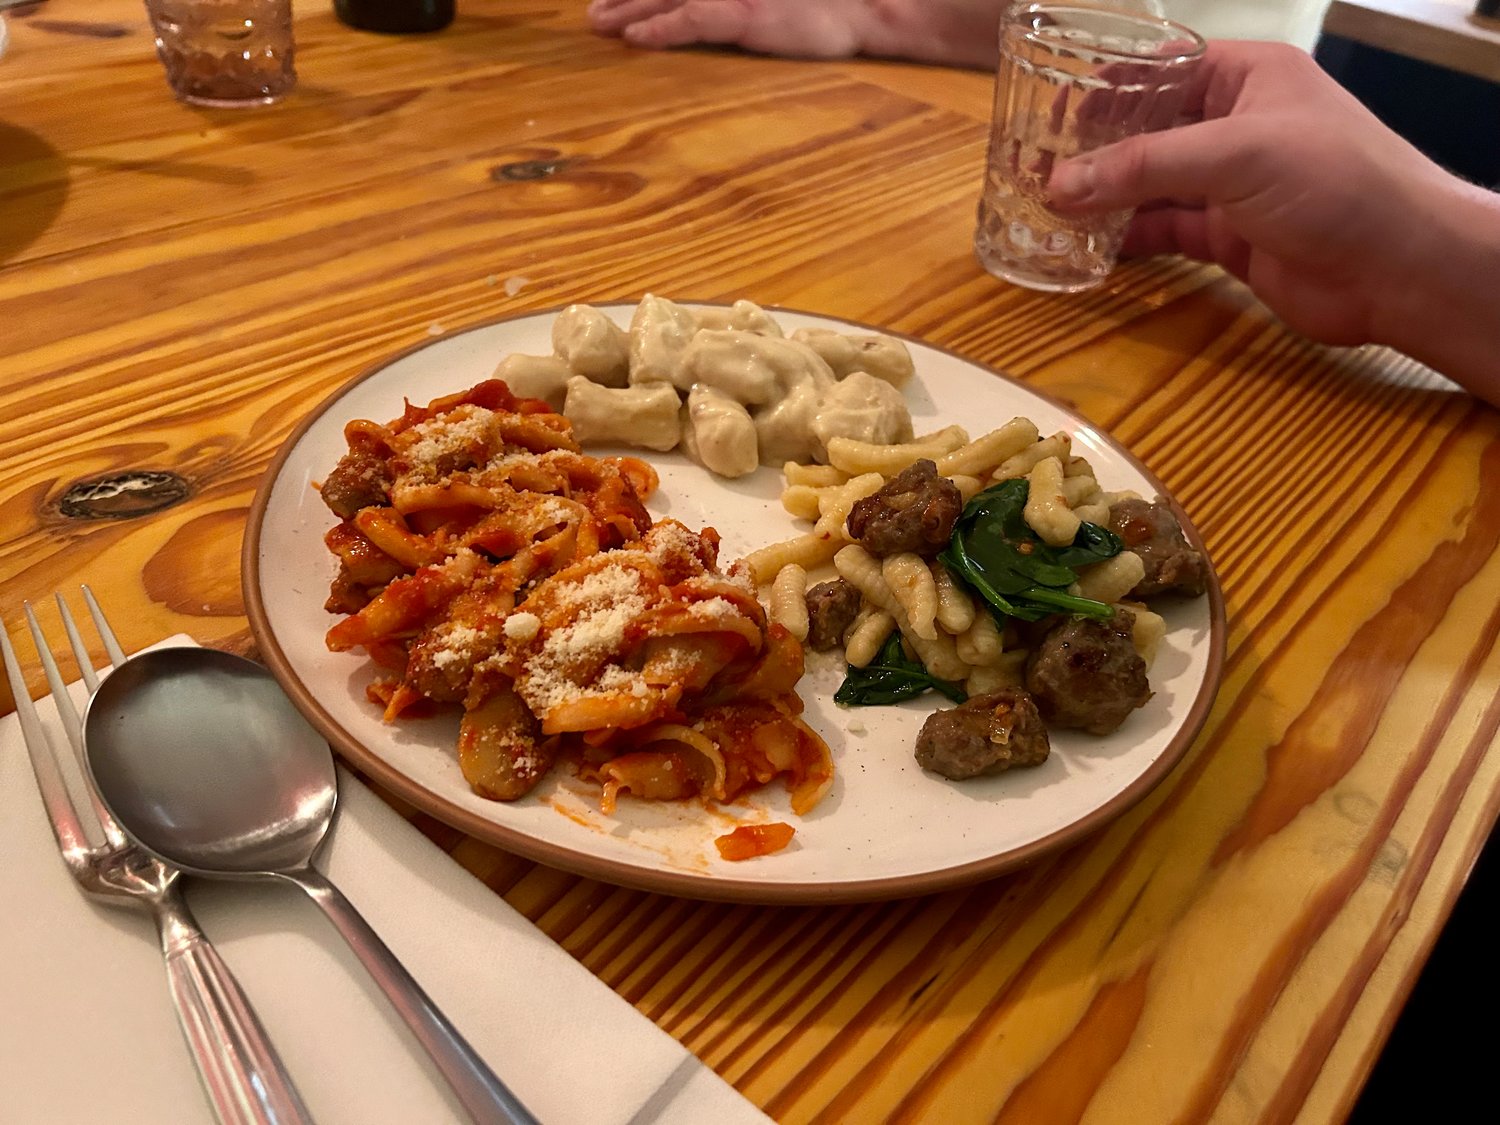 Rigatoni, gnocchi, and cavatelli pasta dishes.